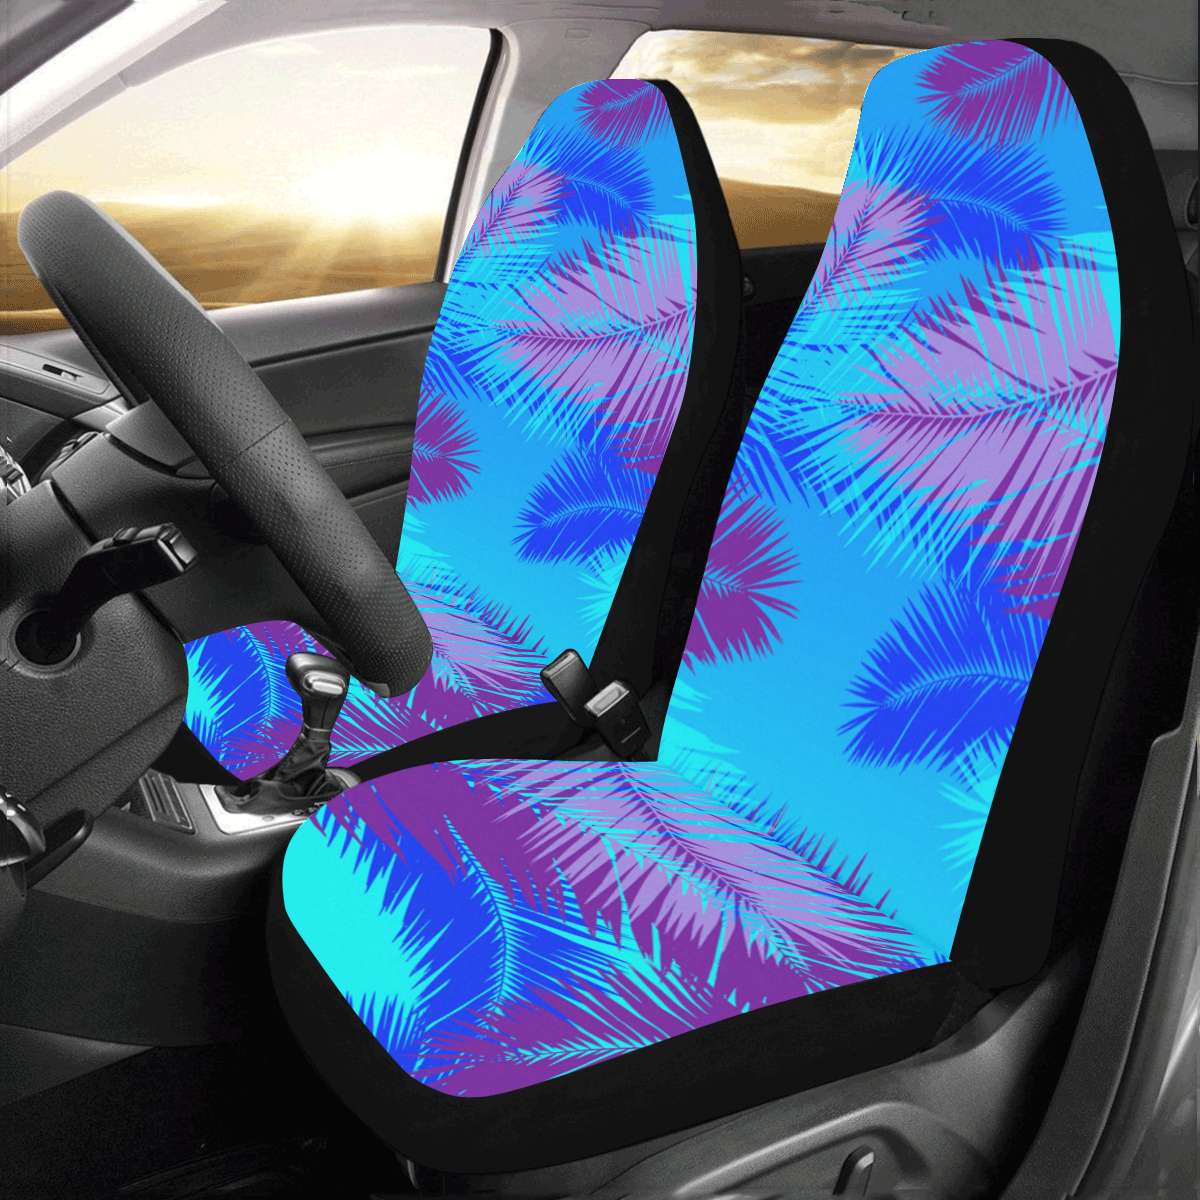 Summer Island pop art design Car Seat Covers (Set of 2)